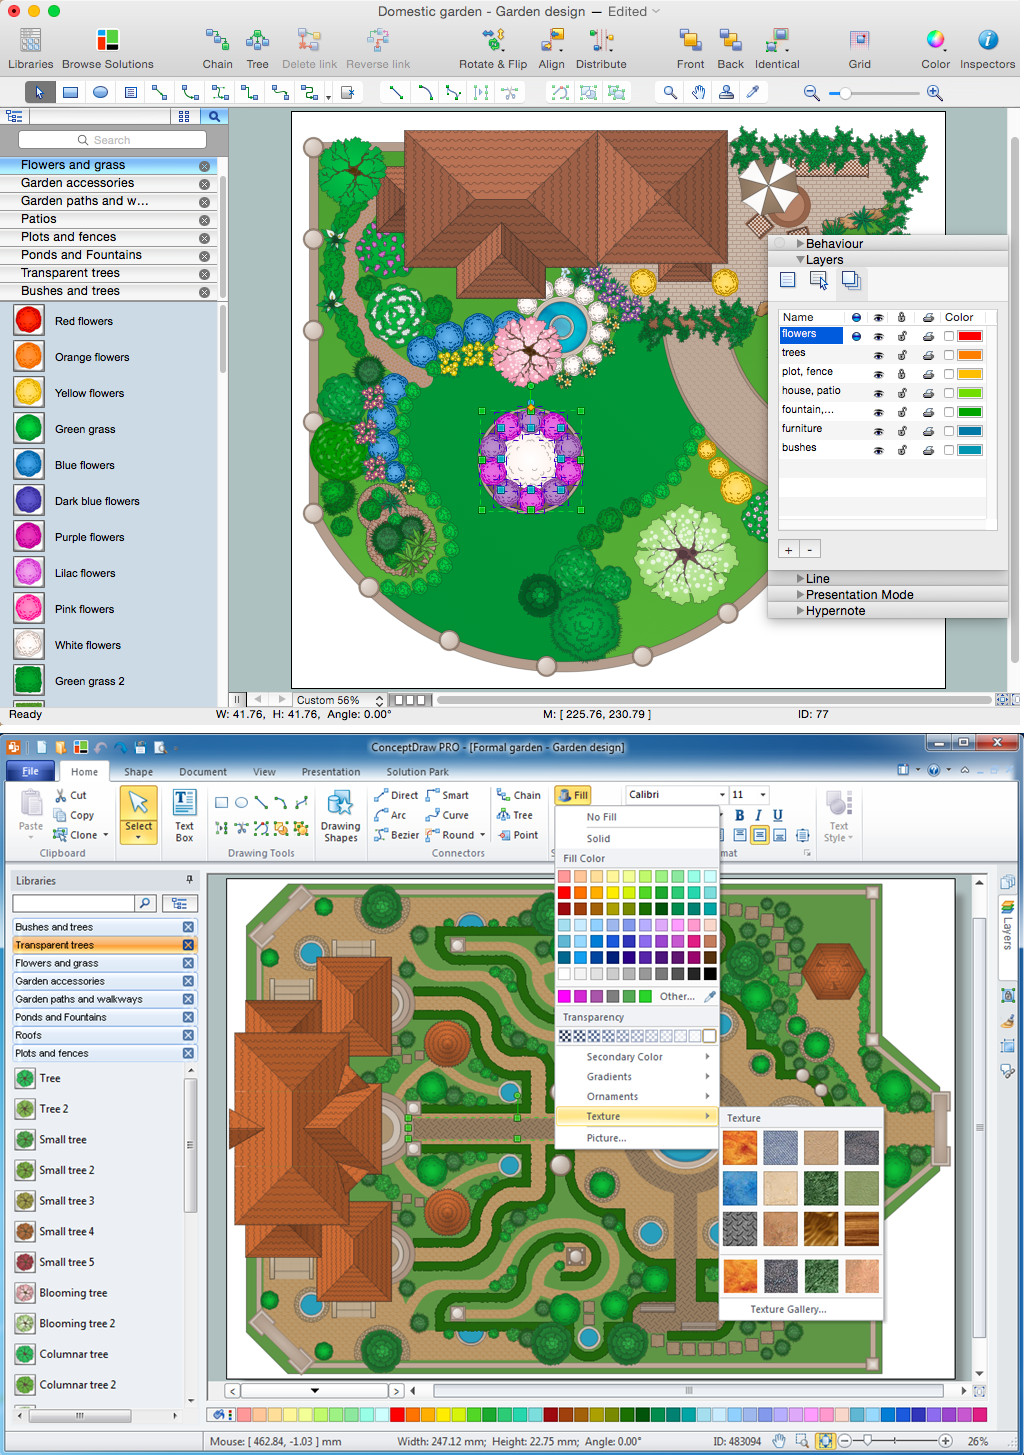 Best ideas about Landscape Design Programs
. Save or Pin Landscape Design Software for Mac & PC Now.